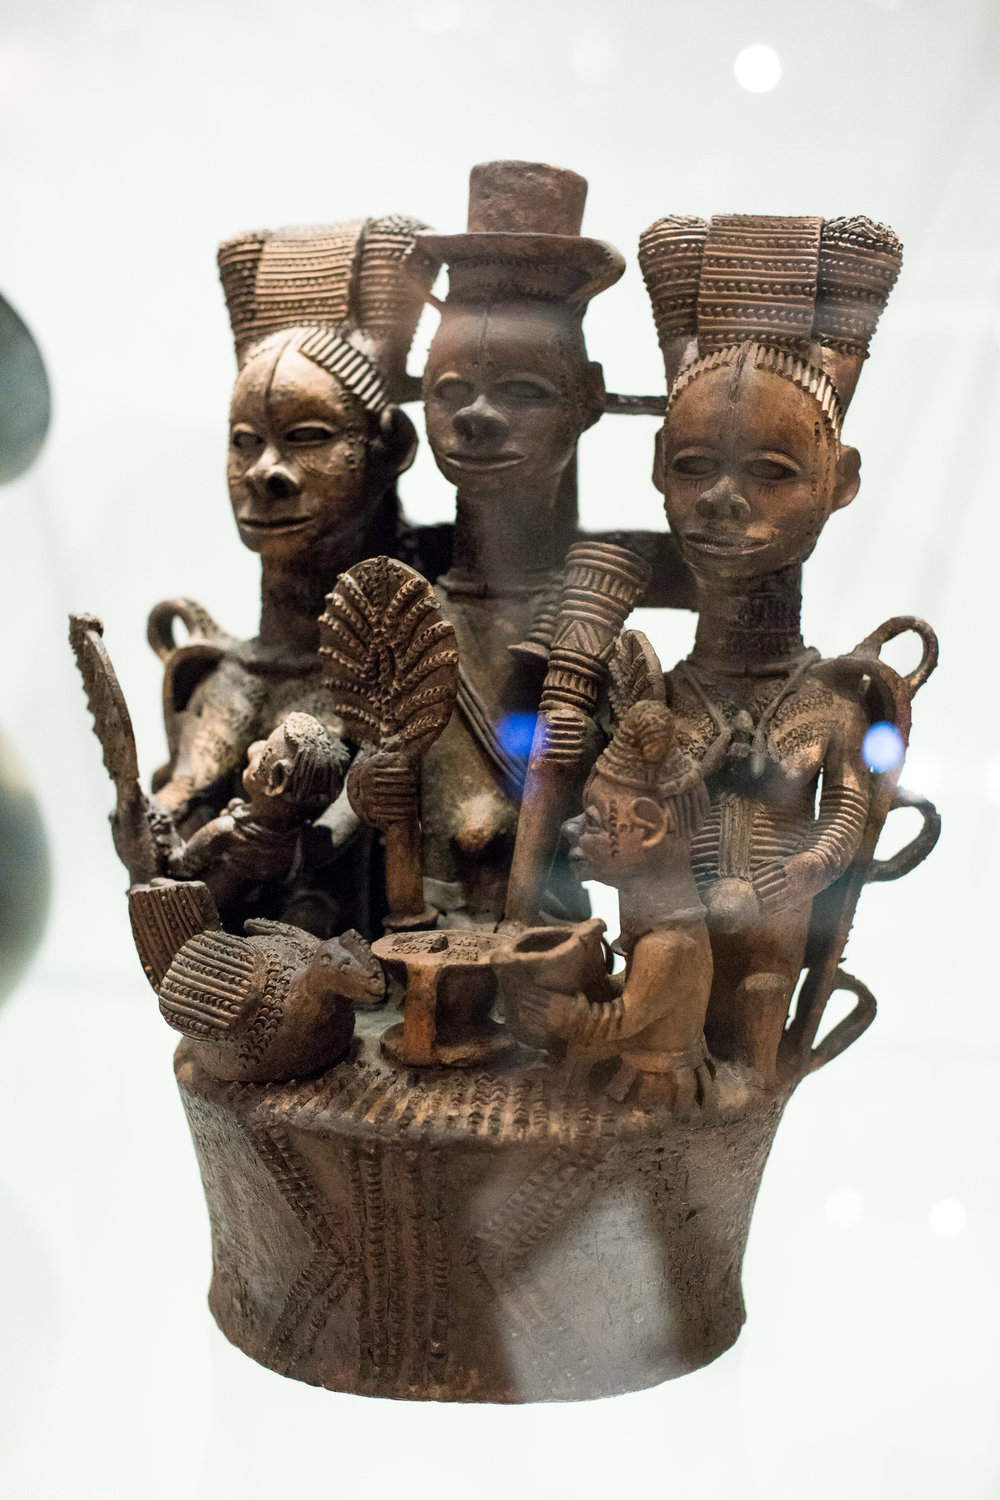 art-tribal-africain-londres-british-museum-sainsbury-galleries-bronze-benin-statue-masque-ivoire-africa-london-bini-edo-galerie-lz-arts-belgique-france-6.jpg